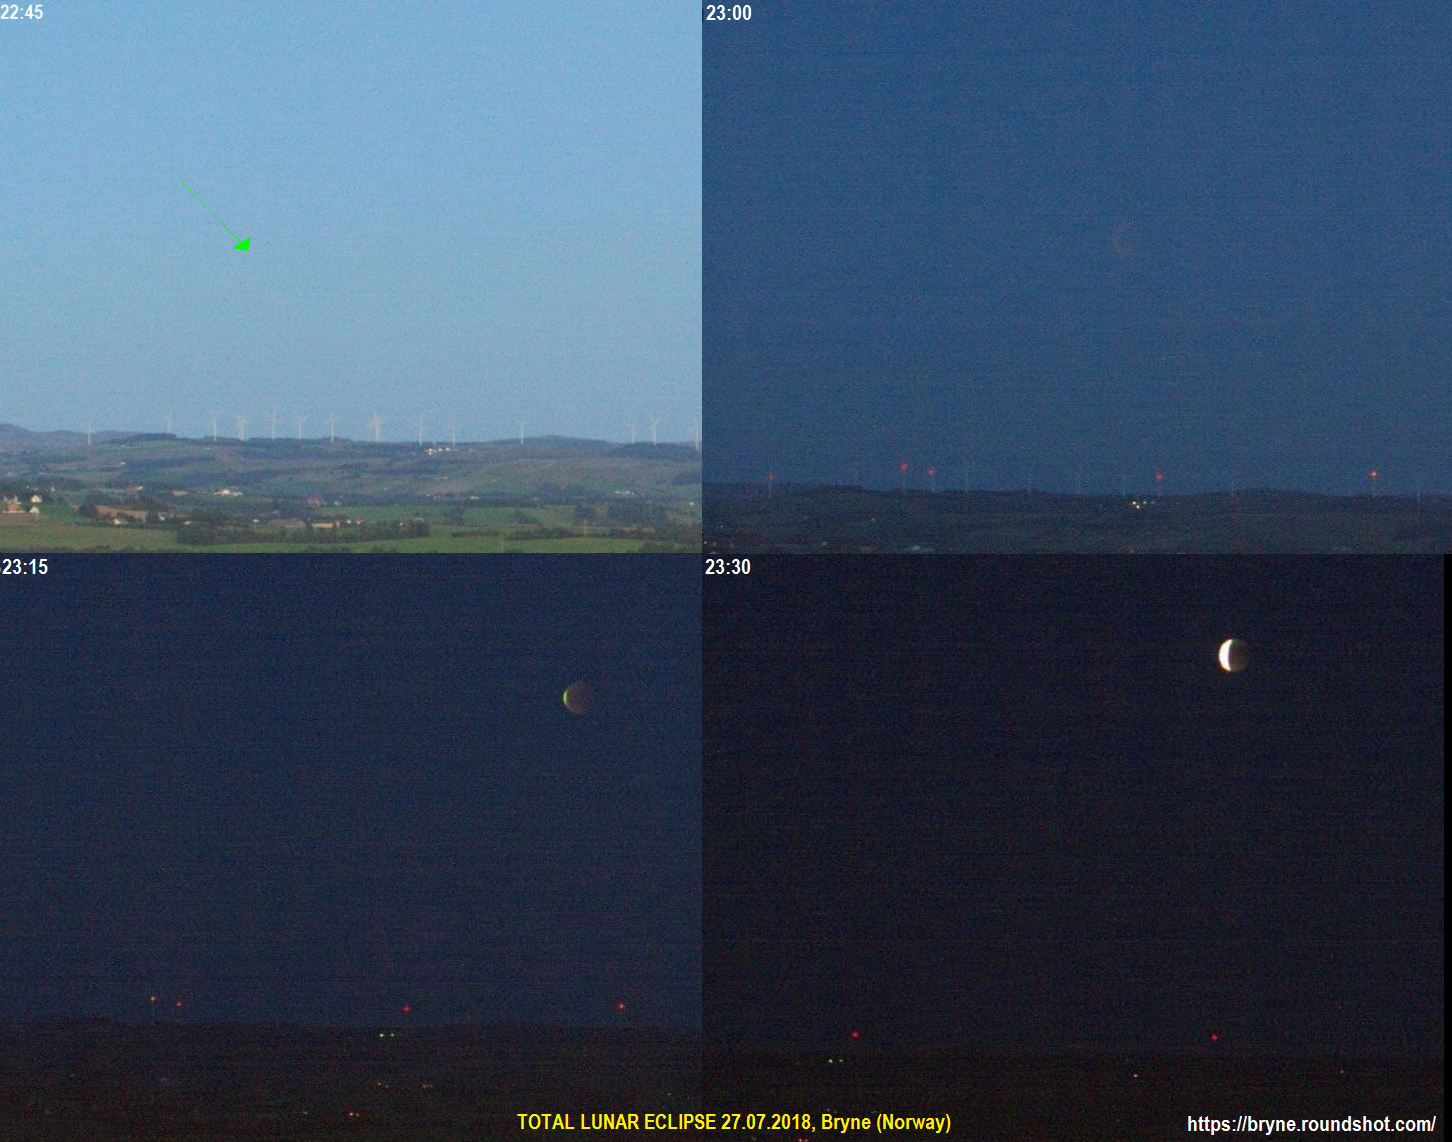 2018 total lunar eclipse seen through webcam from Bryne